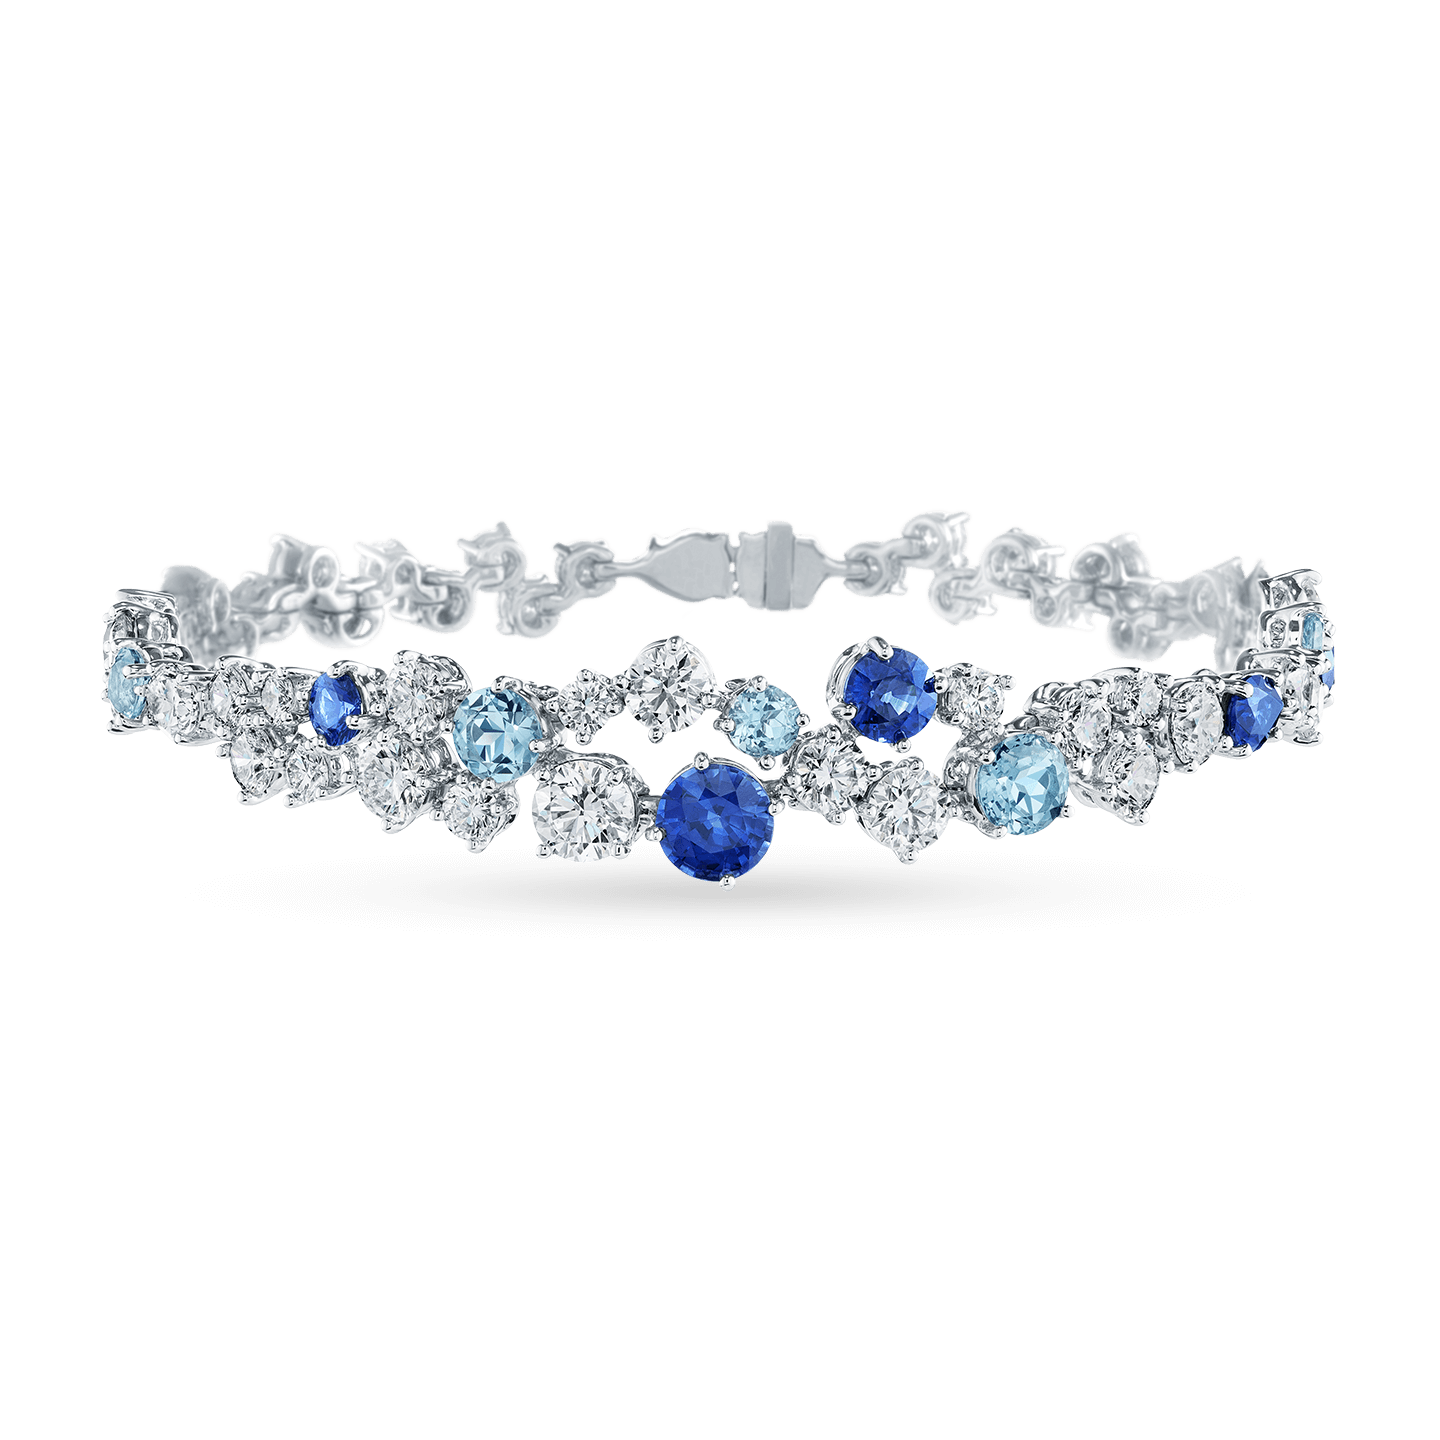 Details 110+ aquamarine and diamond bracelet